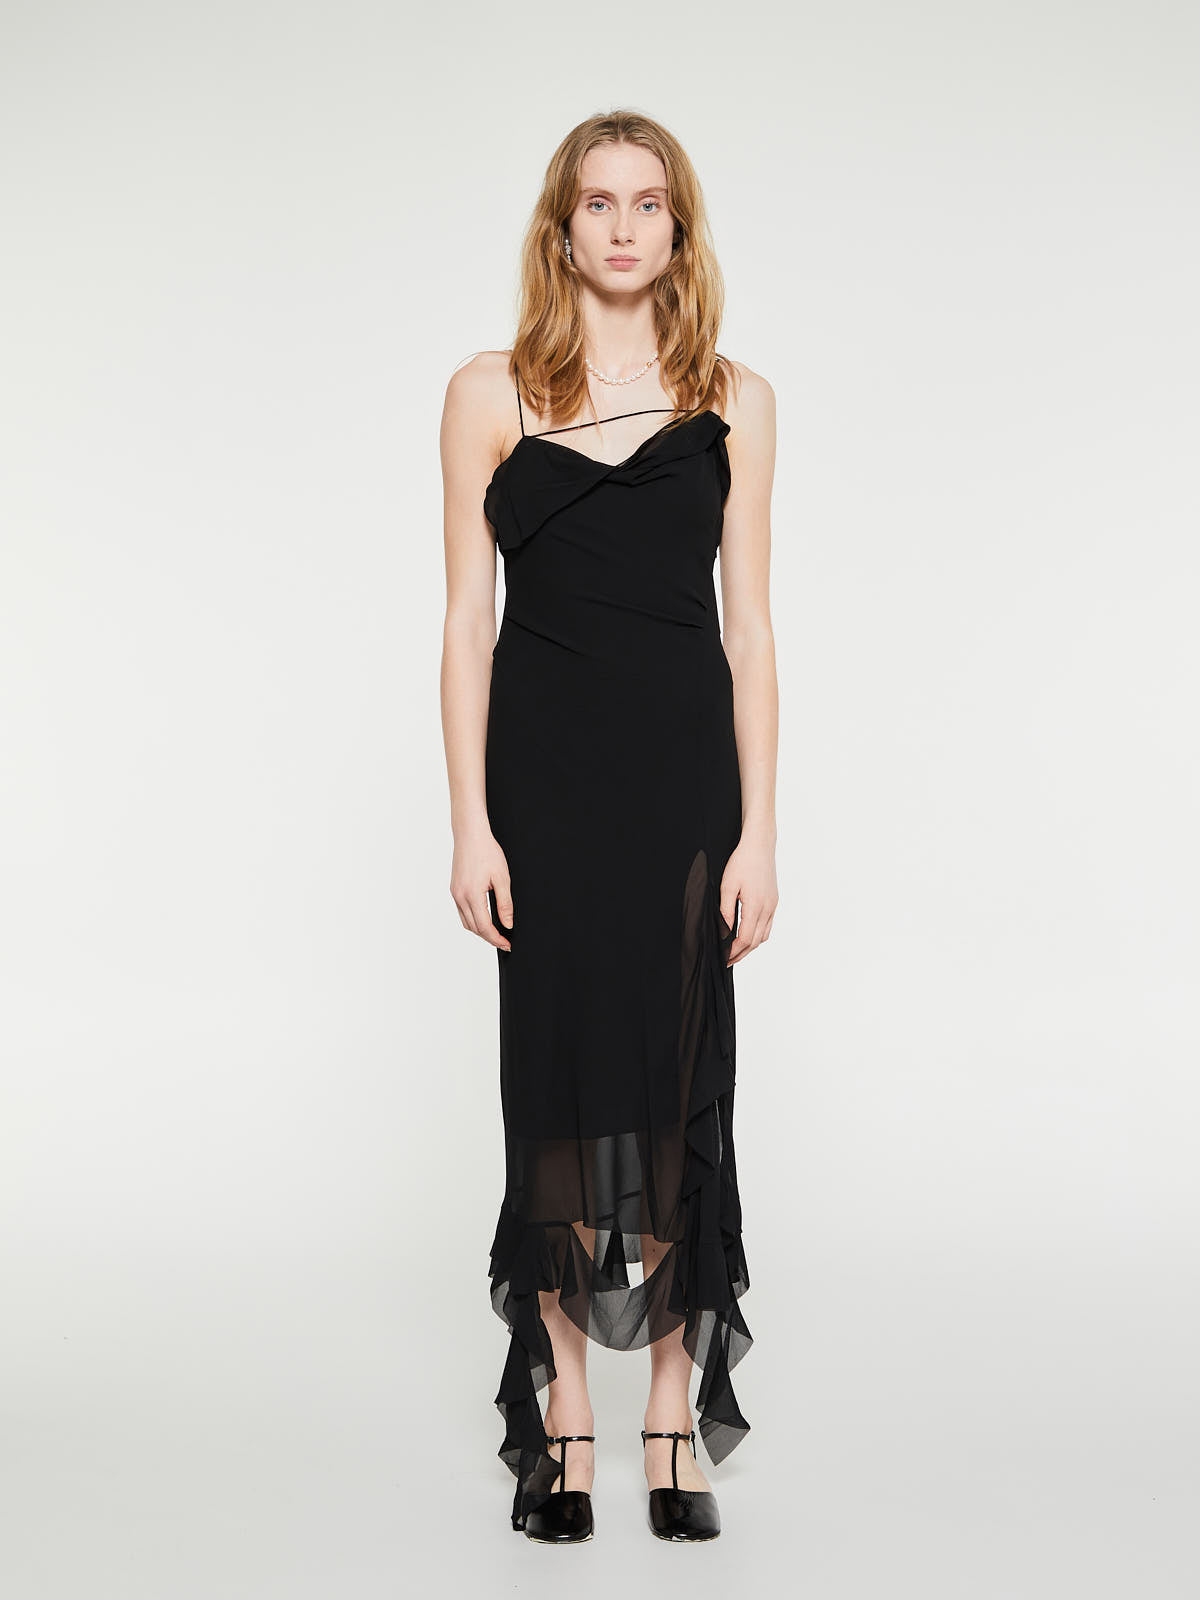 Acne Studios - Ruffle Strap Dress in Black